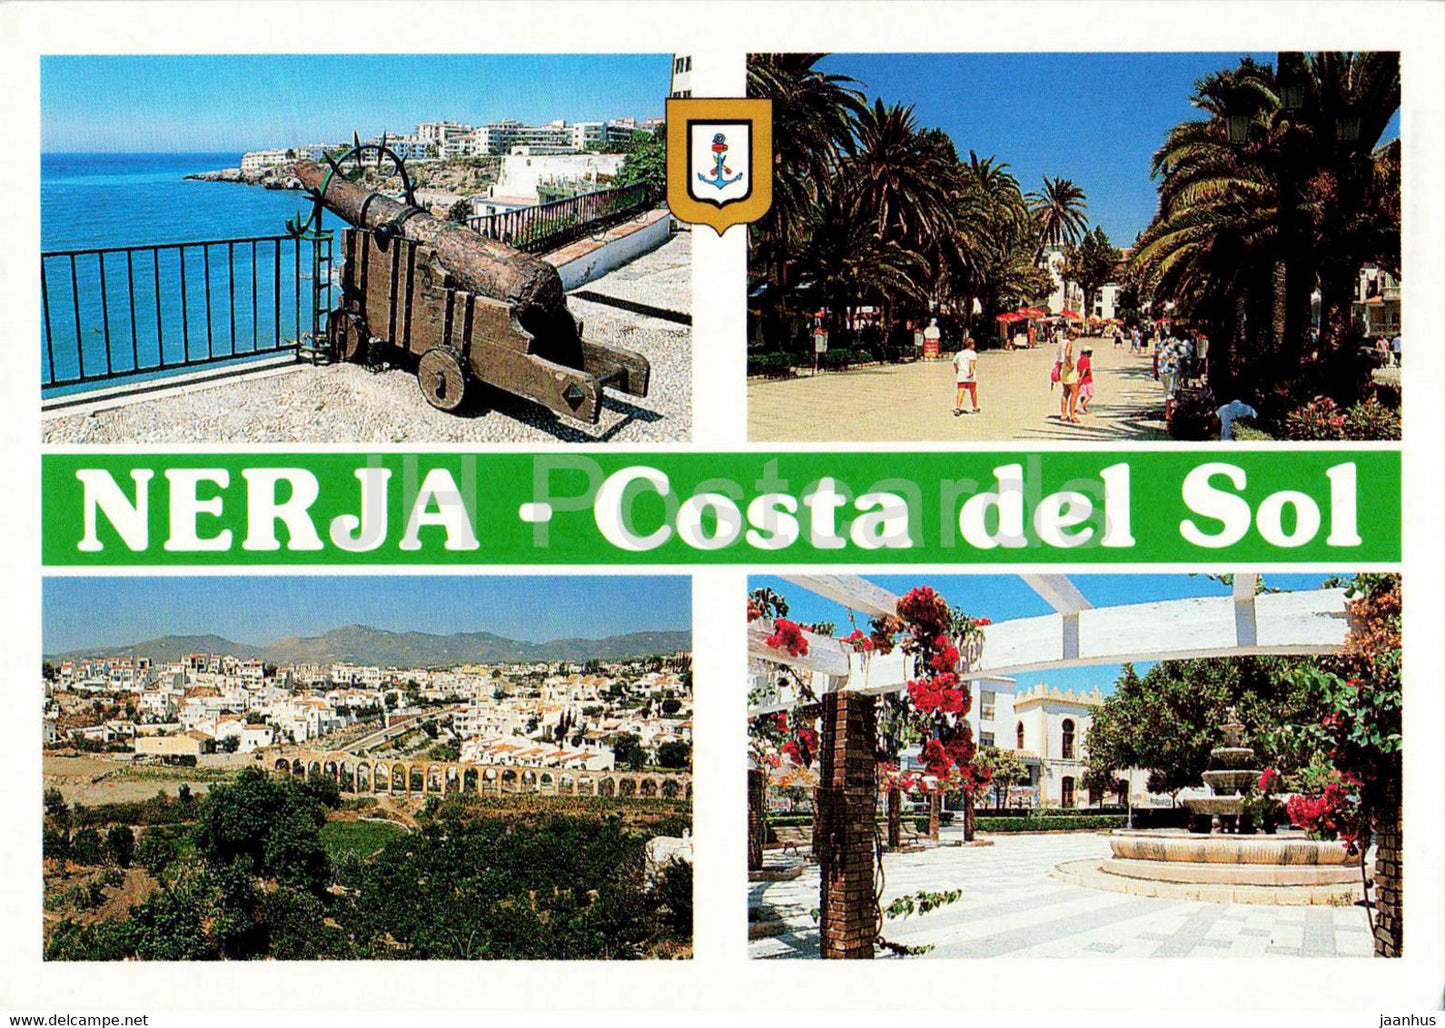 Nerja - Costa del Sol - Diversos Aspectos - cannon - multiview - Spain - used - JH Postcards